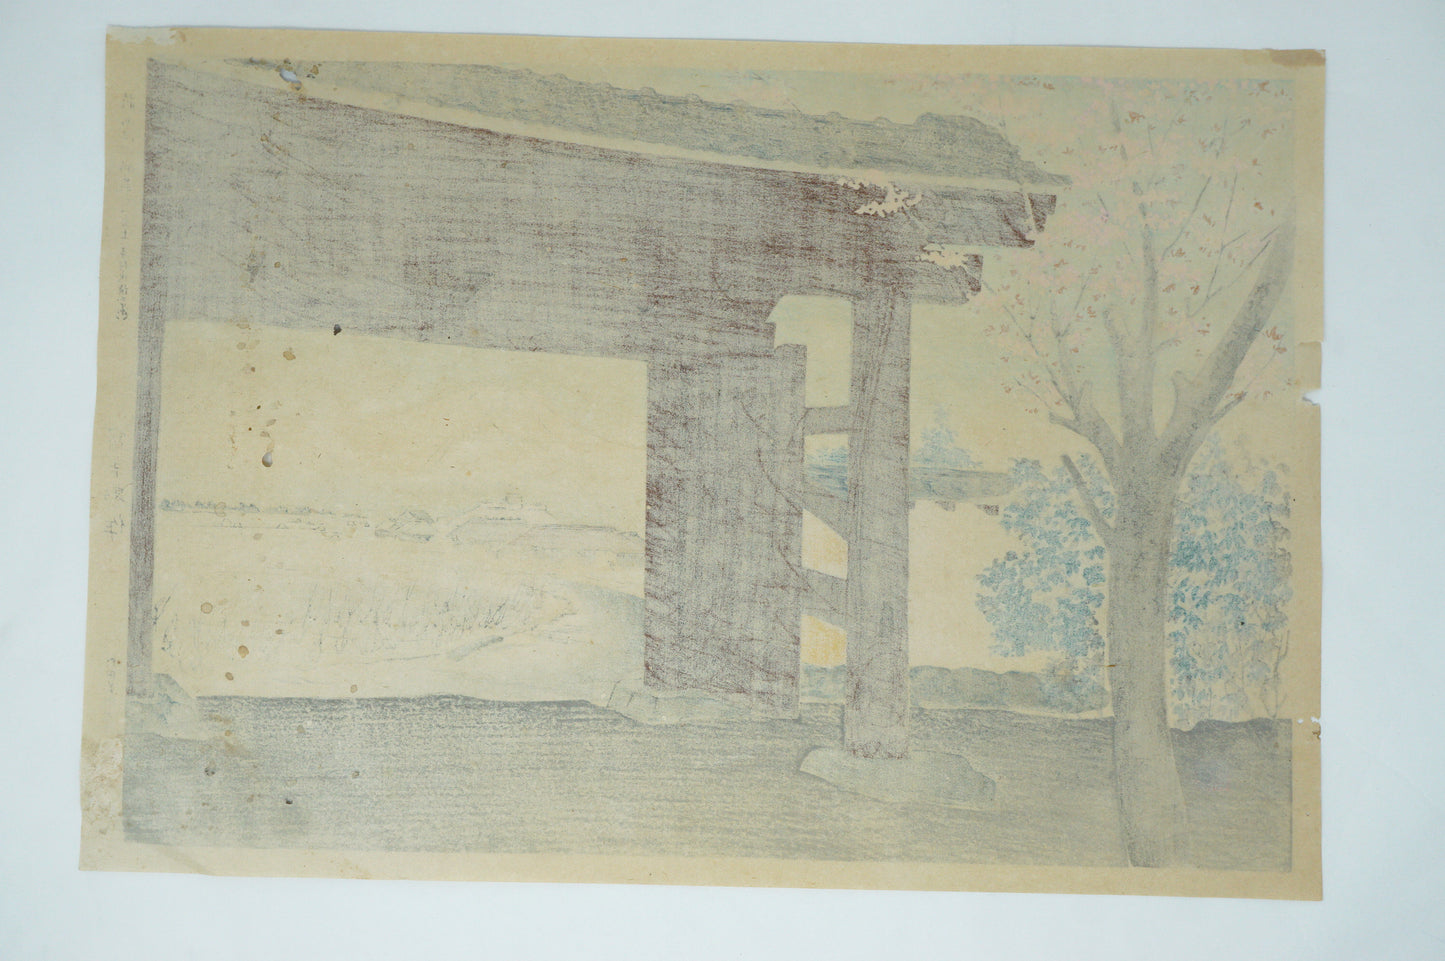 Japanese Woodblock Print Original by Tokuriki Tomikichiro 1941 Shinhanga from Japan 1130D13